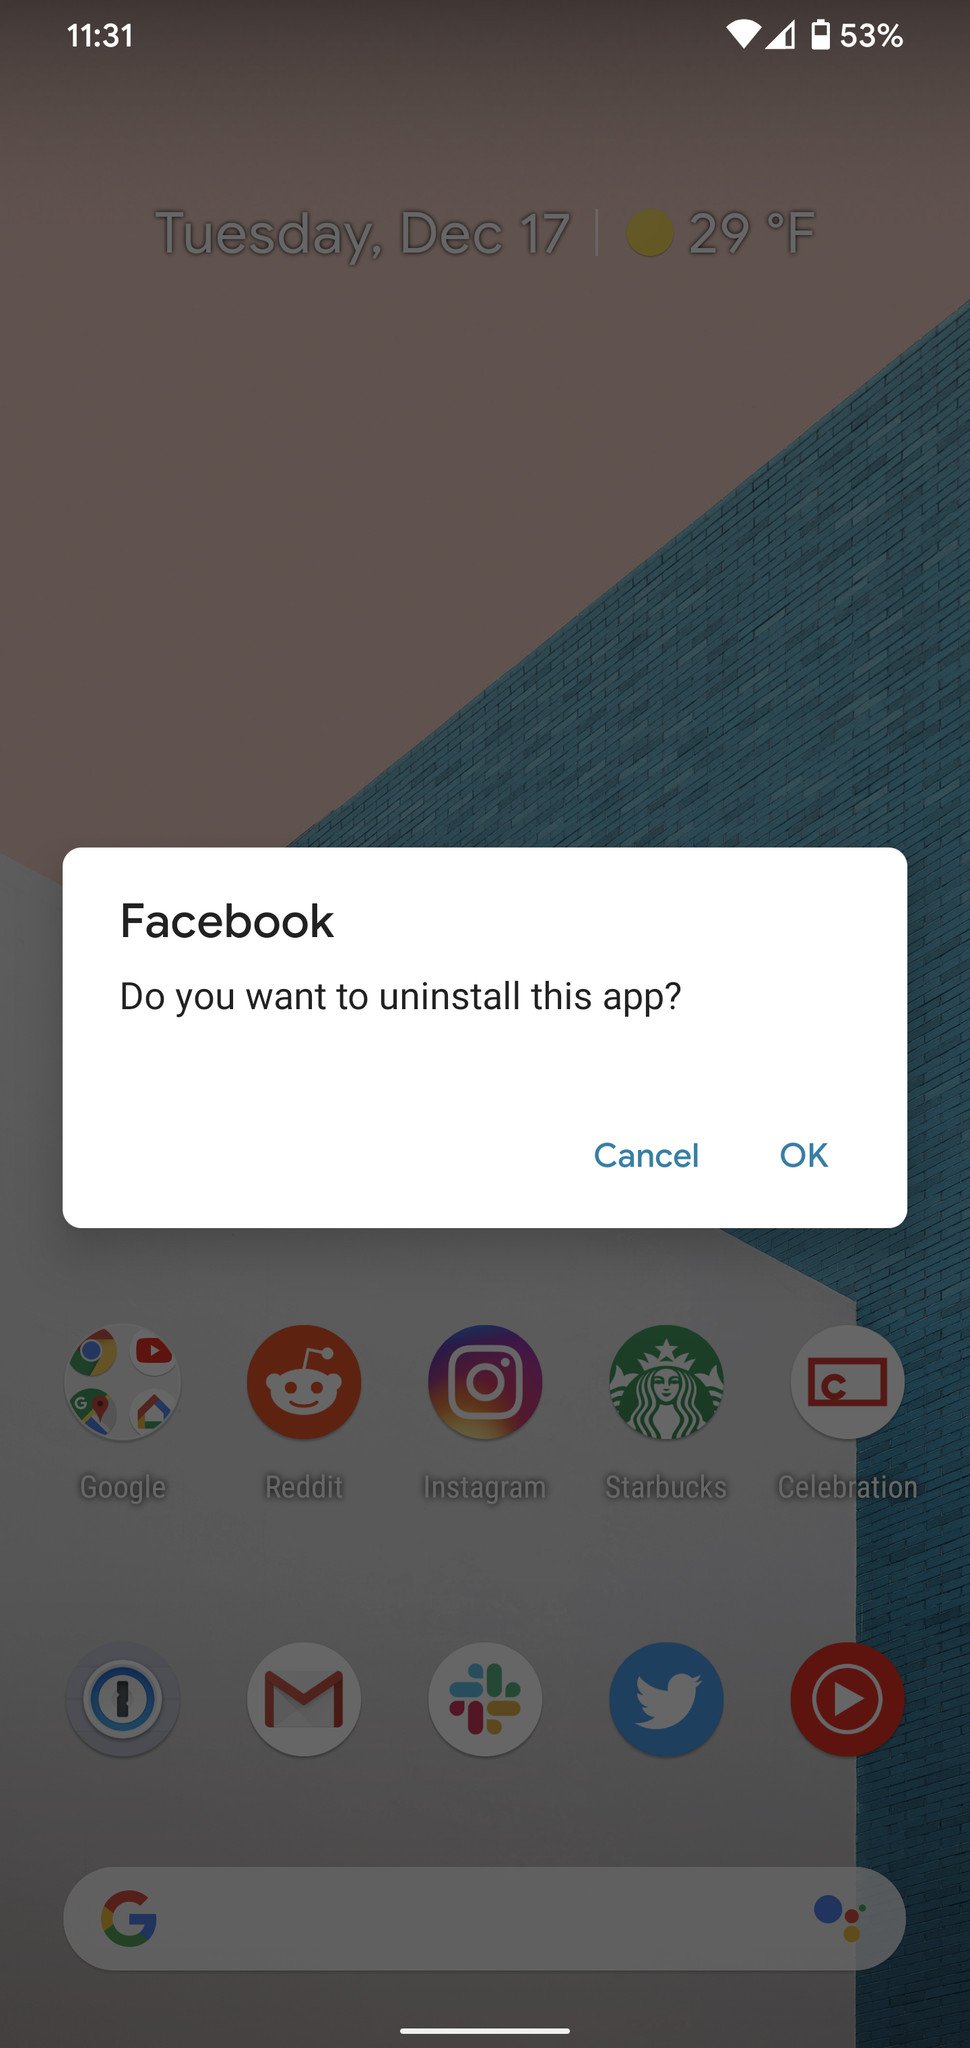 Uninstalling the Facebook app